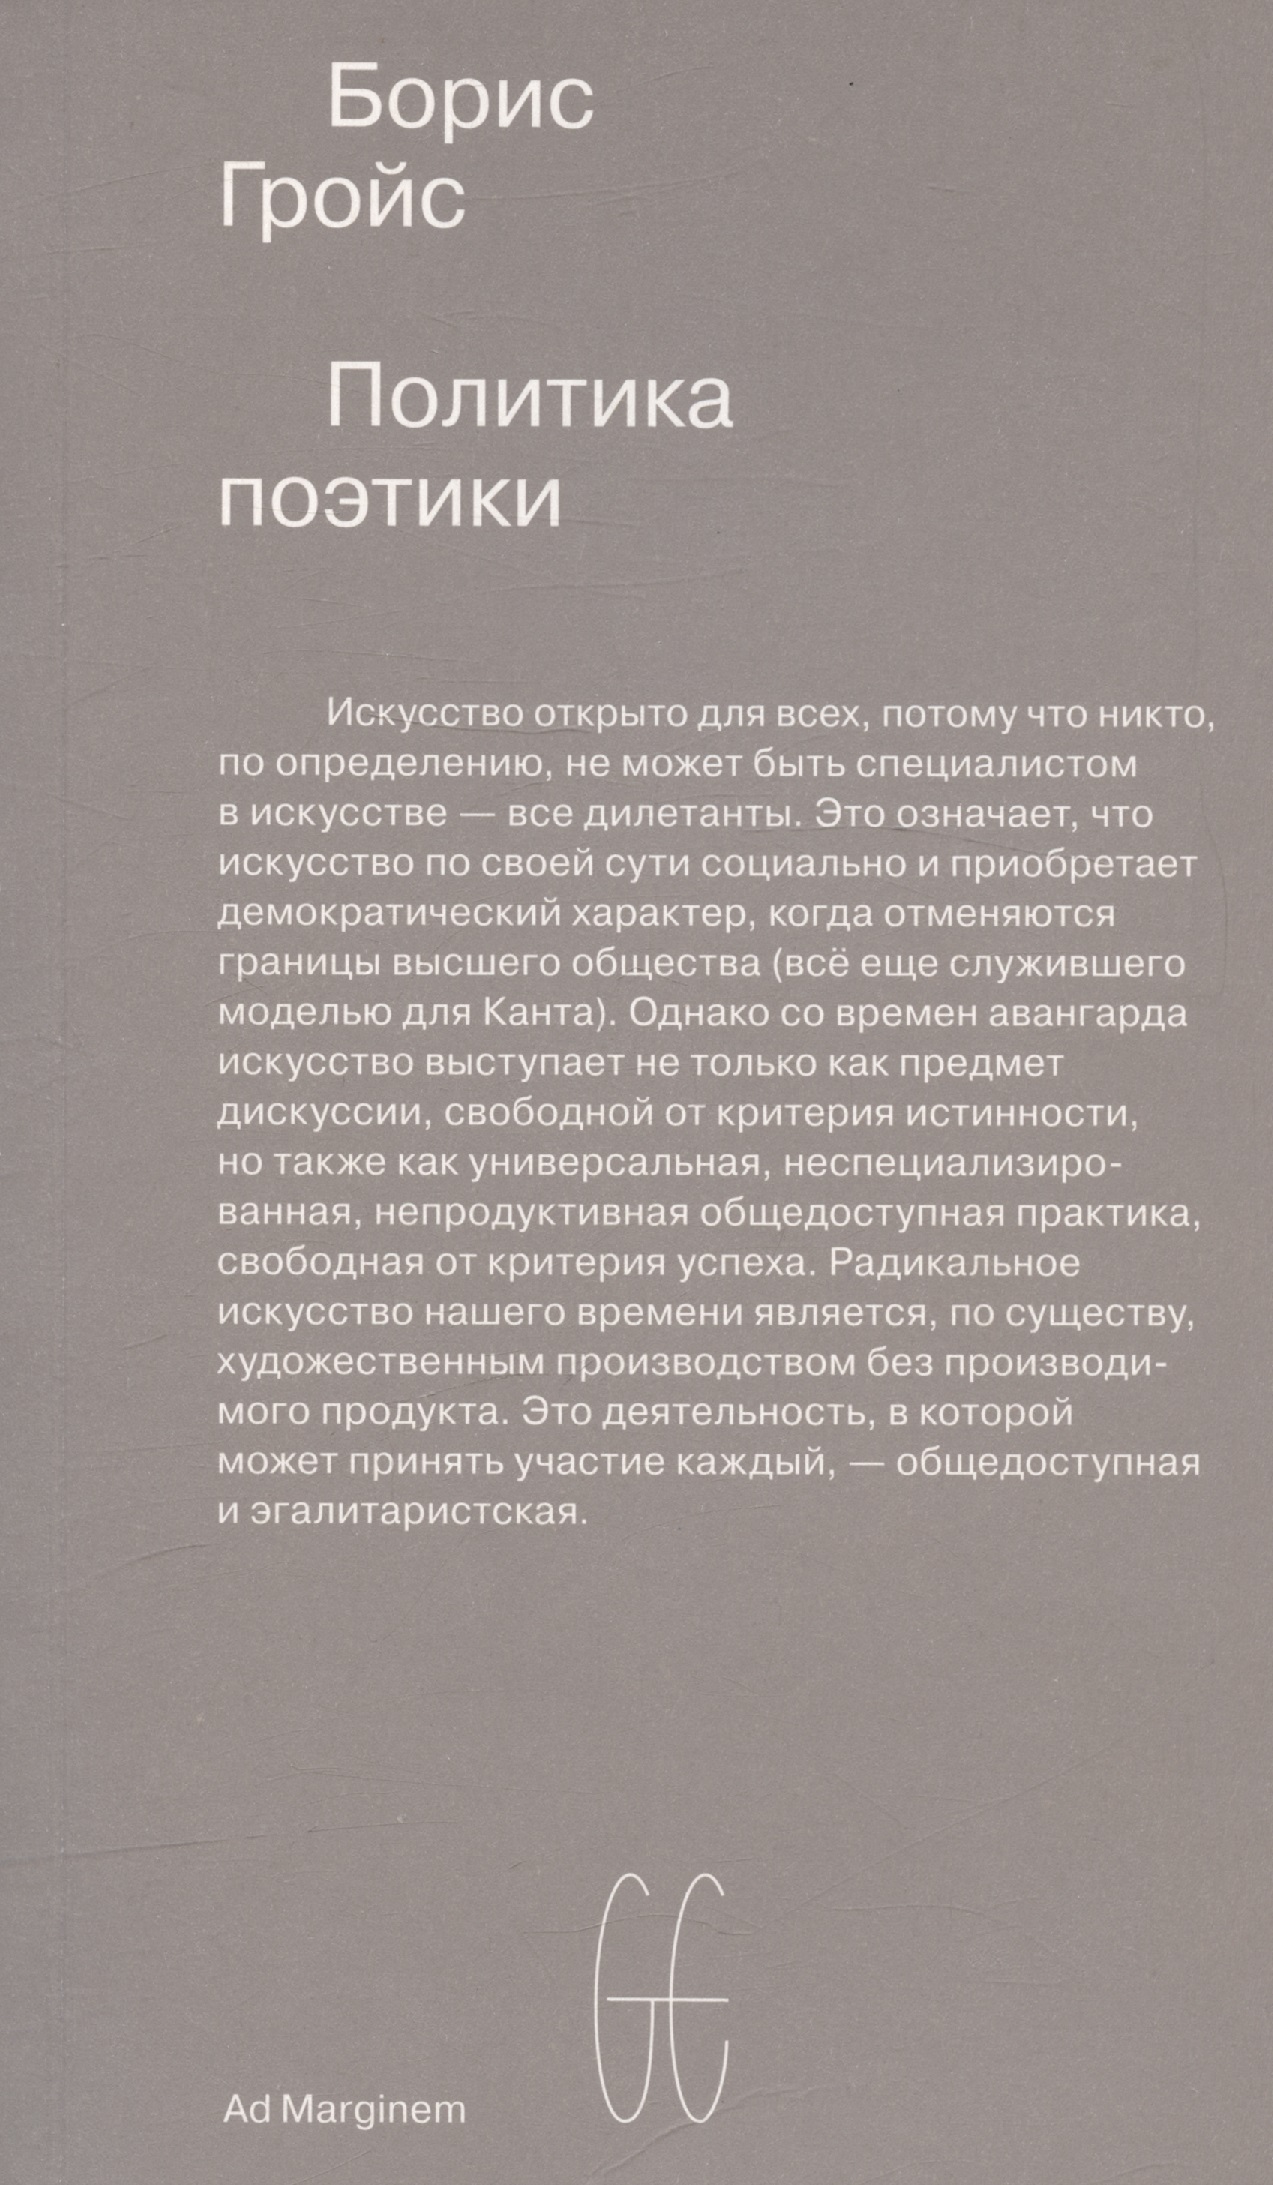 гройс борис ефимович ранние тексты 1976 1990 Гройс Борис Ефимович Политика поэтики